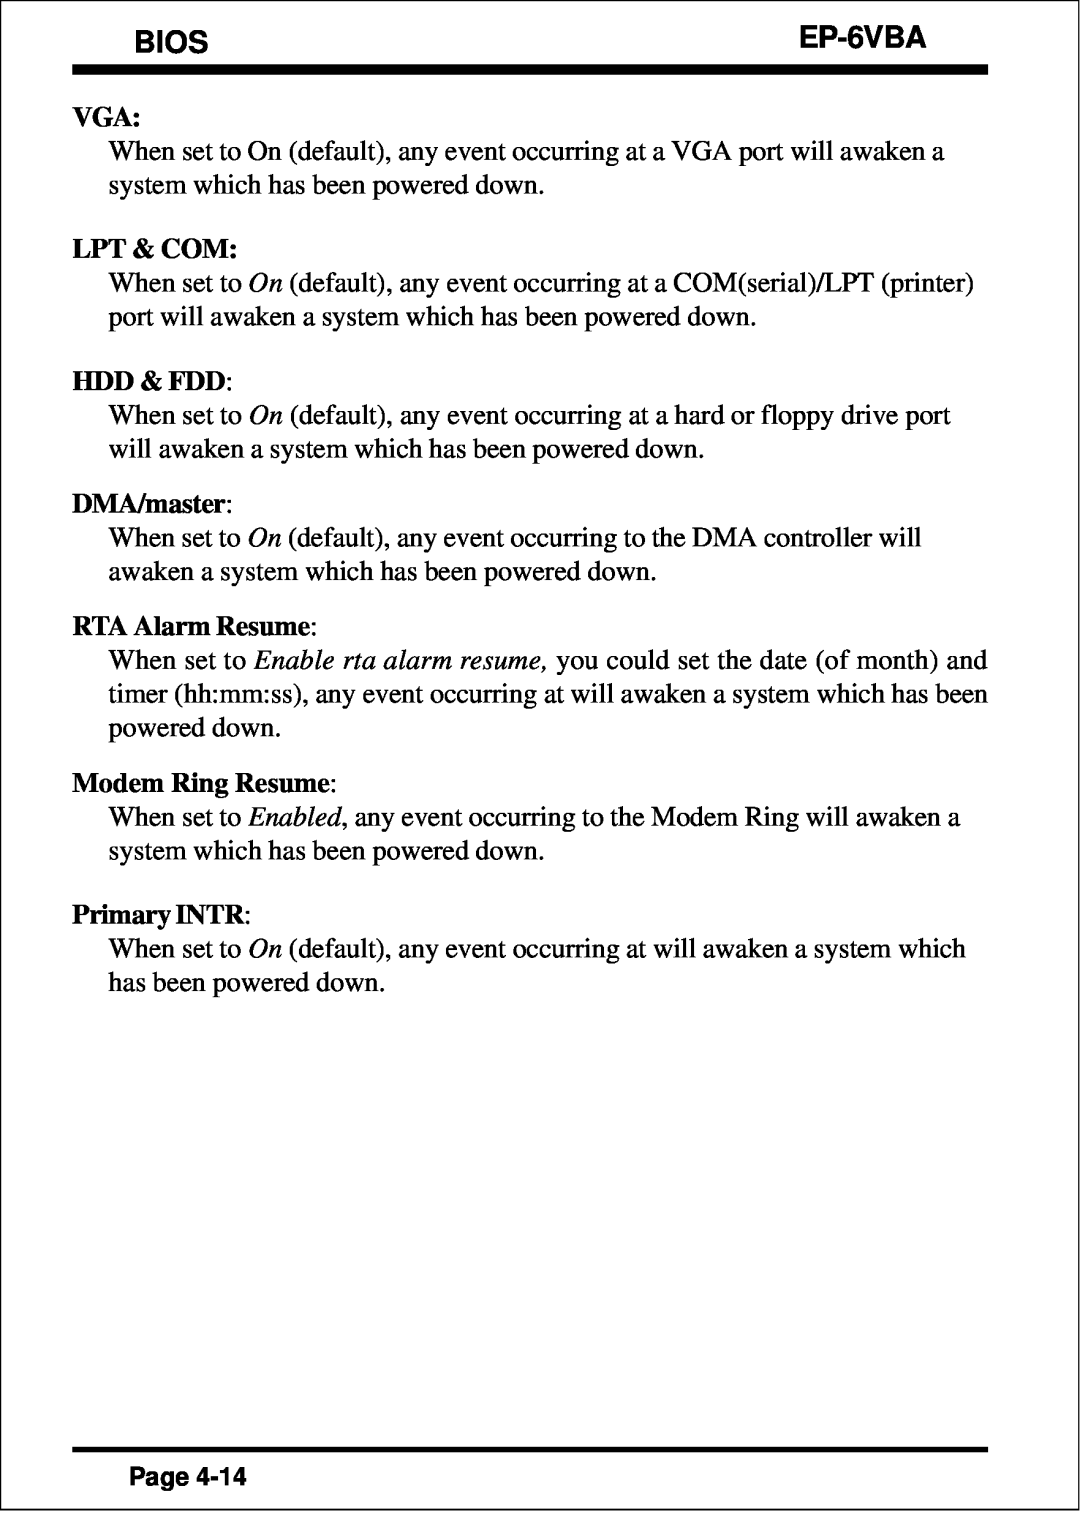 EPoX Computer EP-6VBA Bios, Lpt & Com, Hdd & Fdd, DMA/master, RTA Alarm Resume, Modem Ring Resume, Primary INTR 